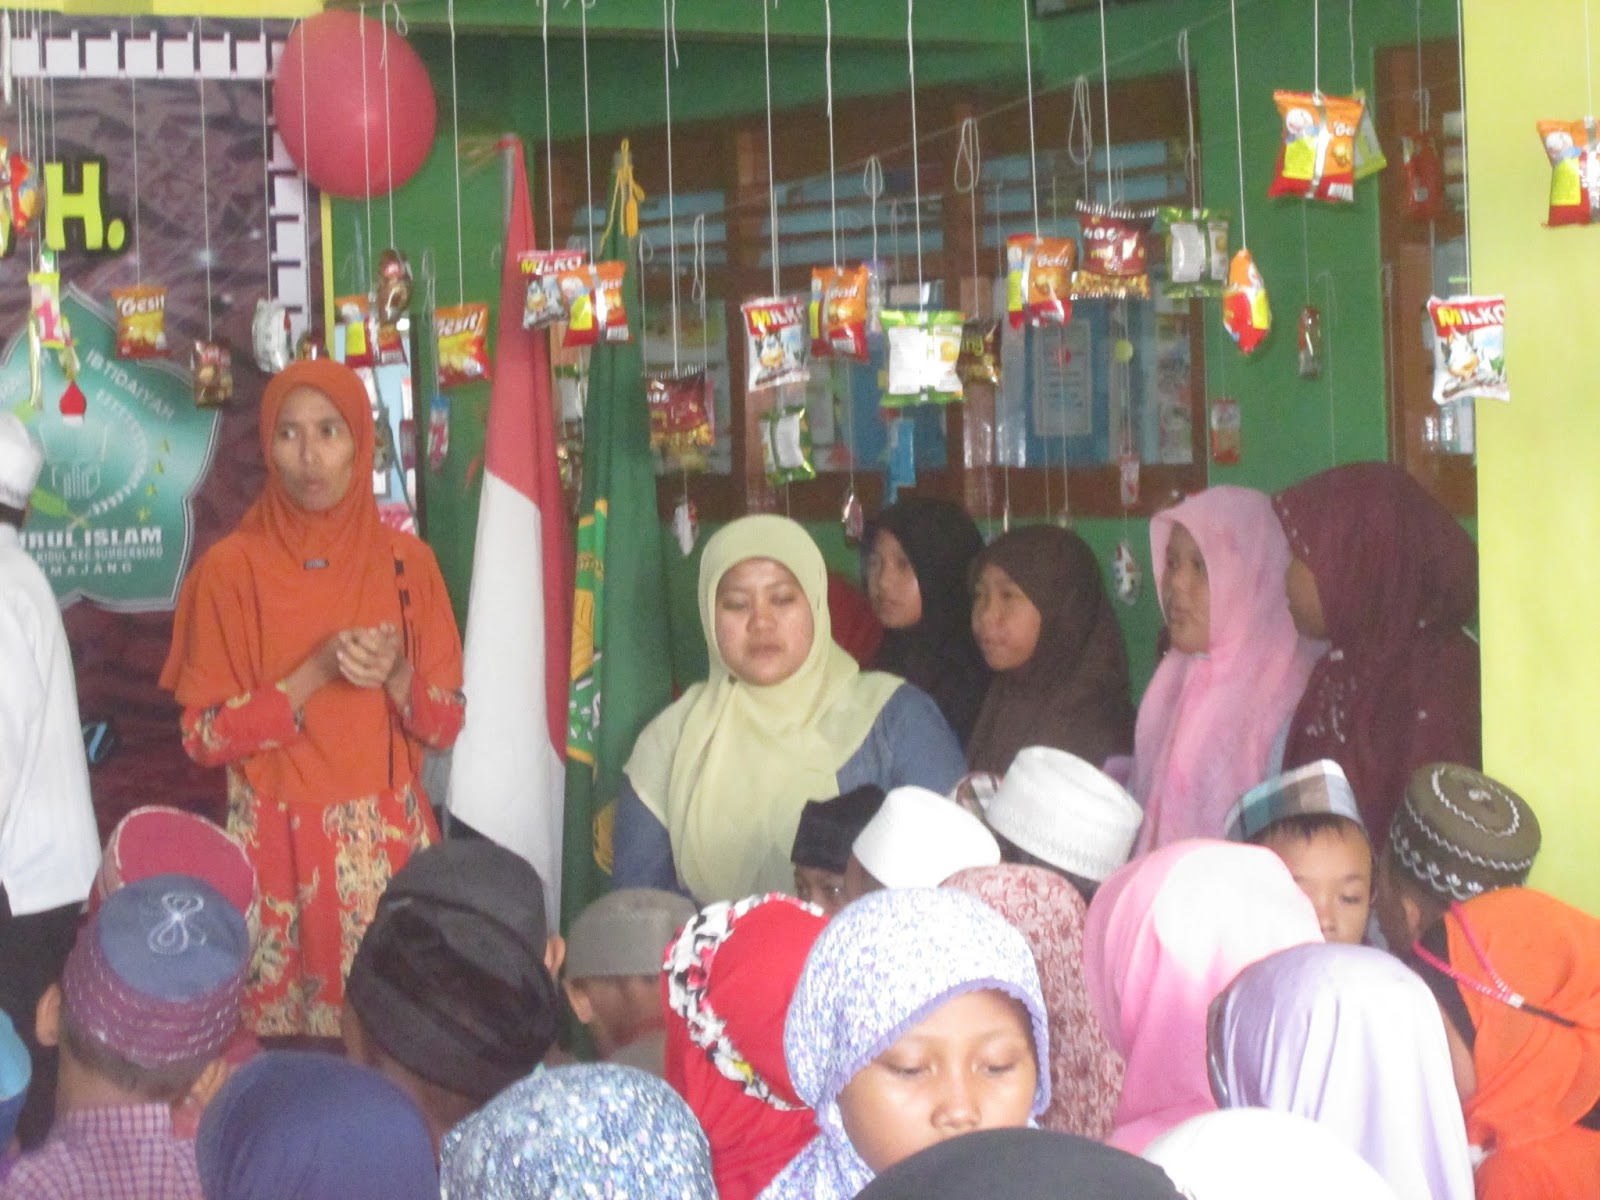 January 2016 - MI Nurul Islam Labruk Kidul Kec.Sumbersuko 